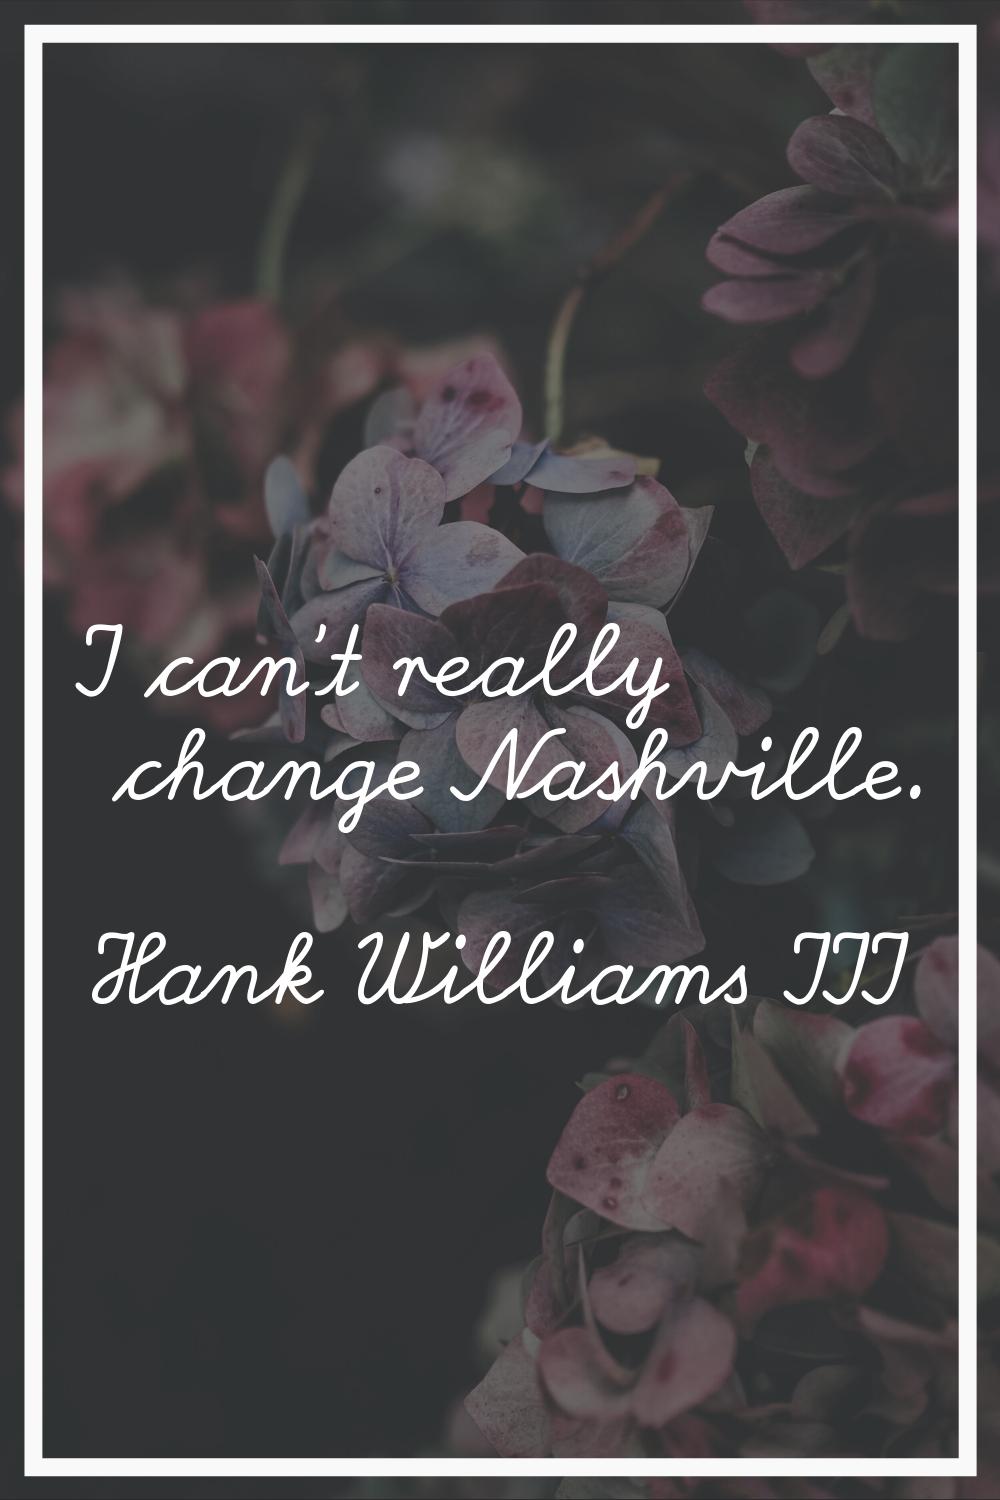 I can't really change Nashville.